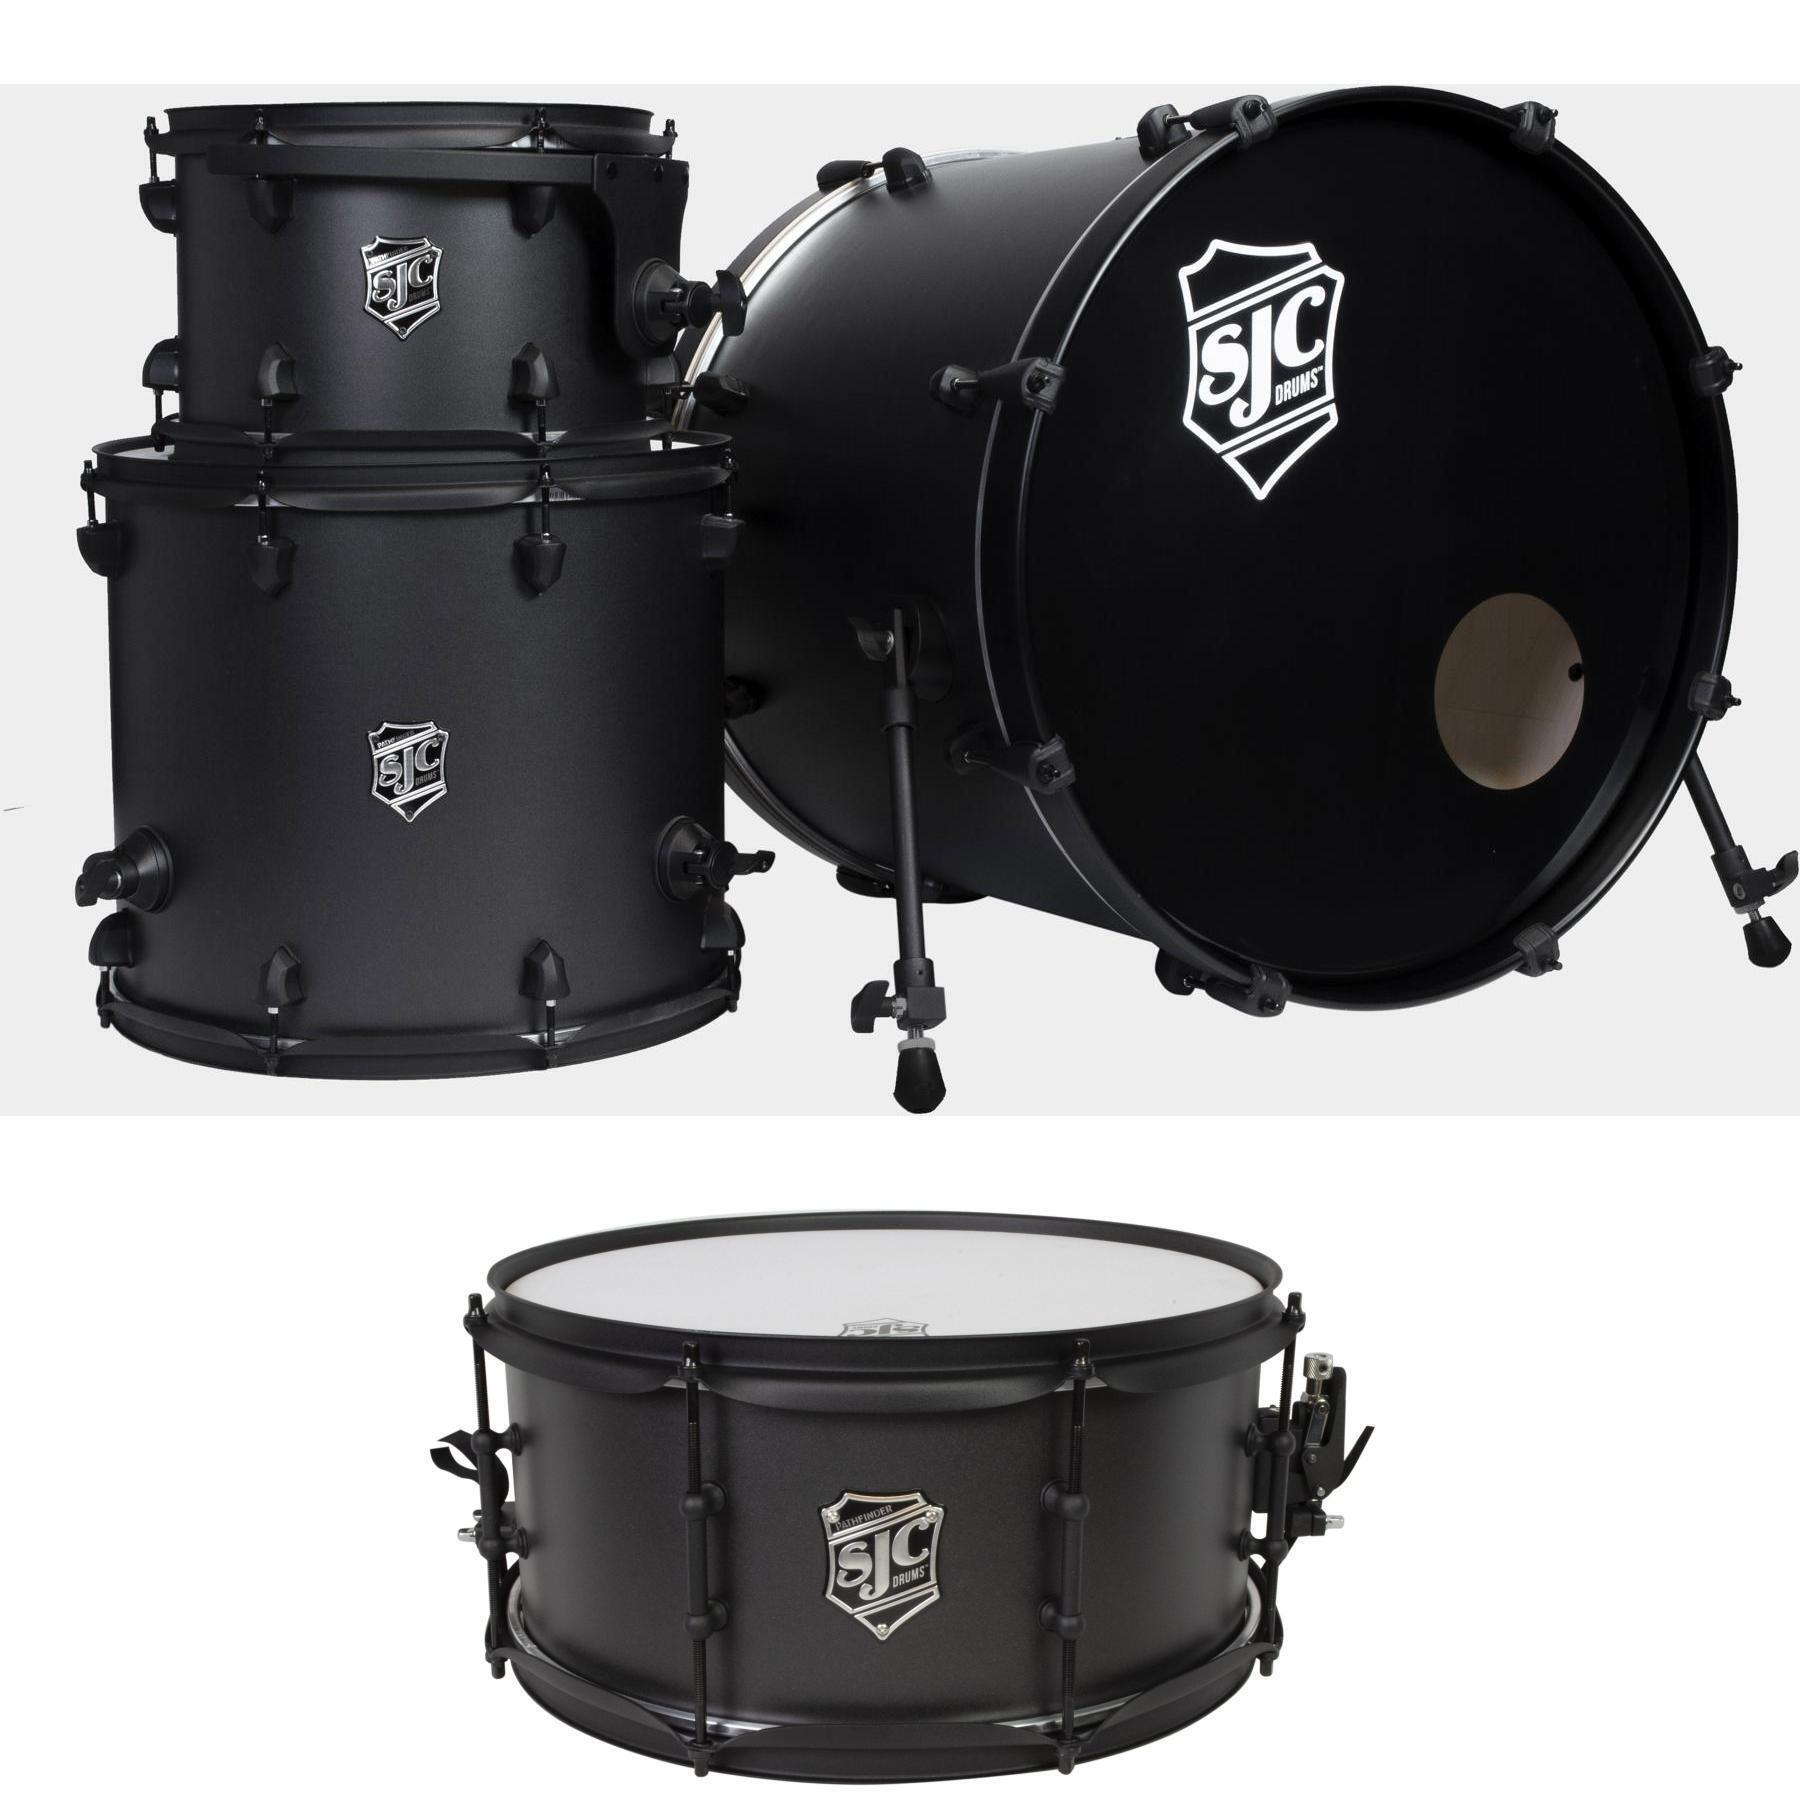 SJC Custom Drums Pathfinder Series 4-piece Shell Pack (Snare) - Galaxy Grey